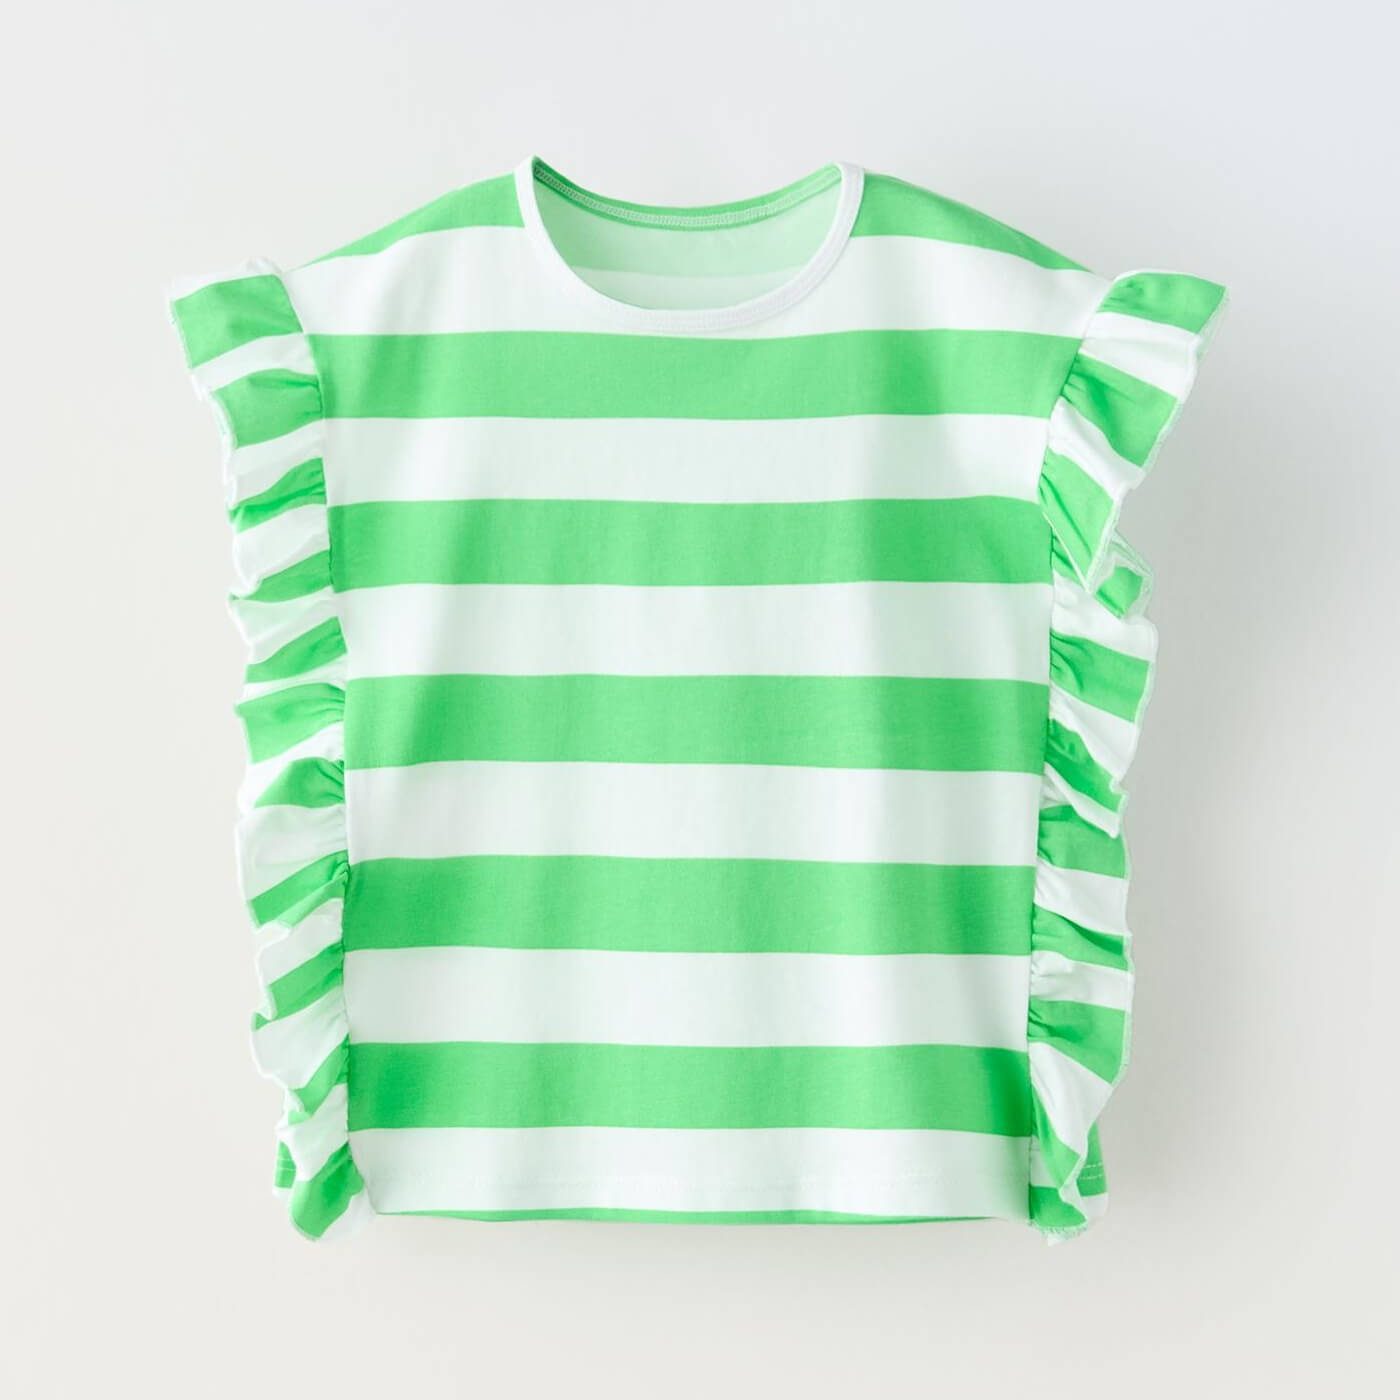 Футболка Zara Striped With Ruffle Trims, зеленый/белый футболка zara woven striped with embroidery голубой зеленый